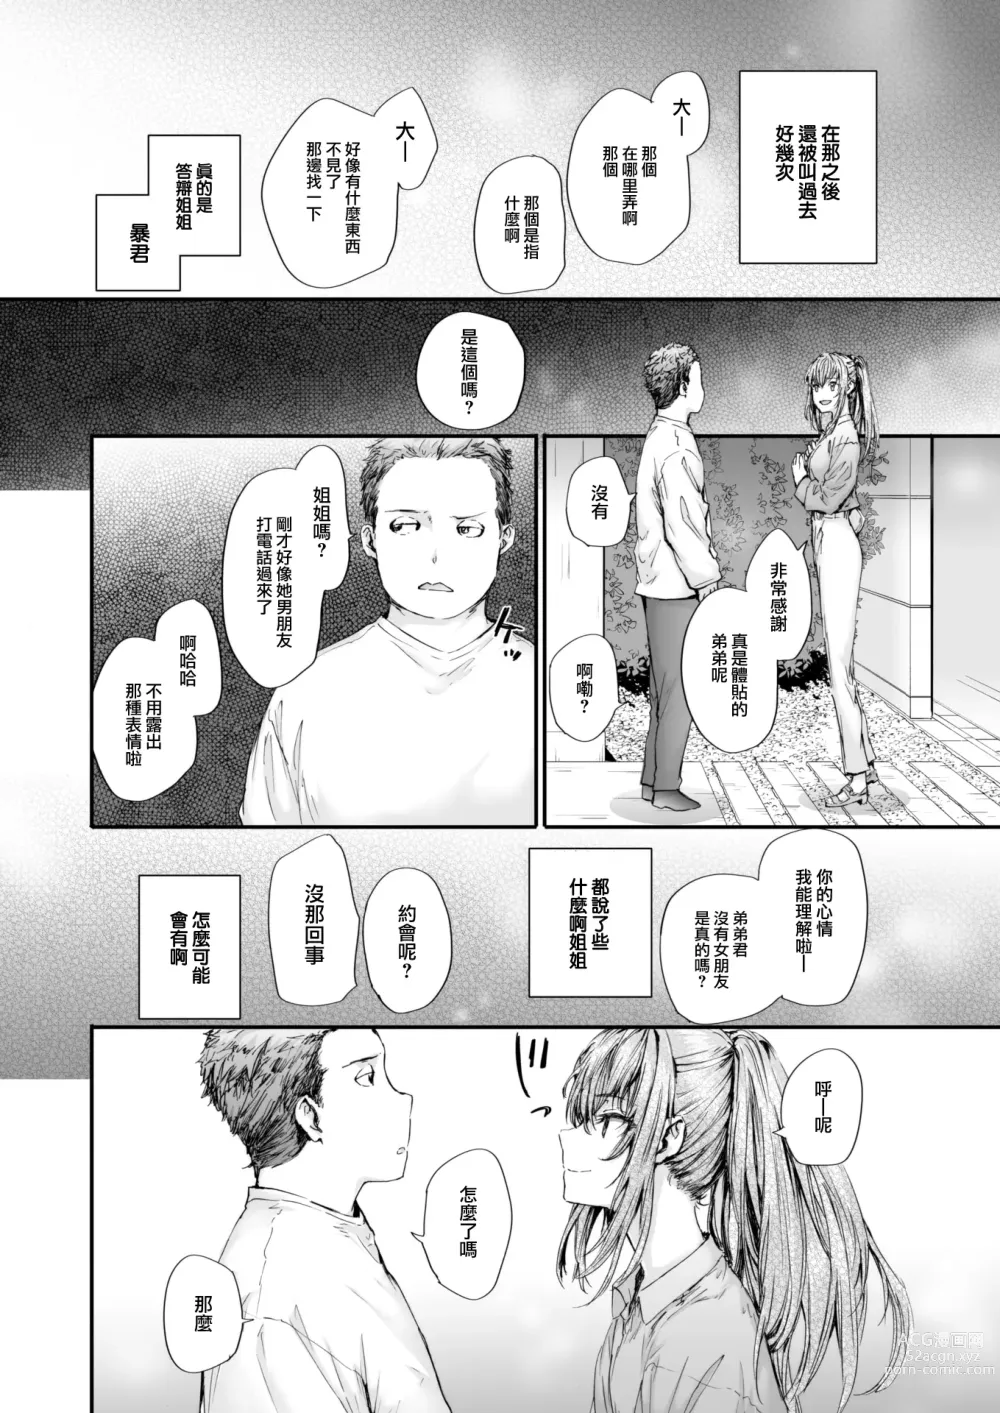 Page 5 of manga Mitame ga Subete